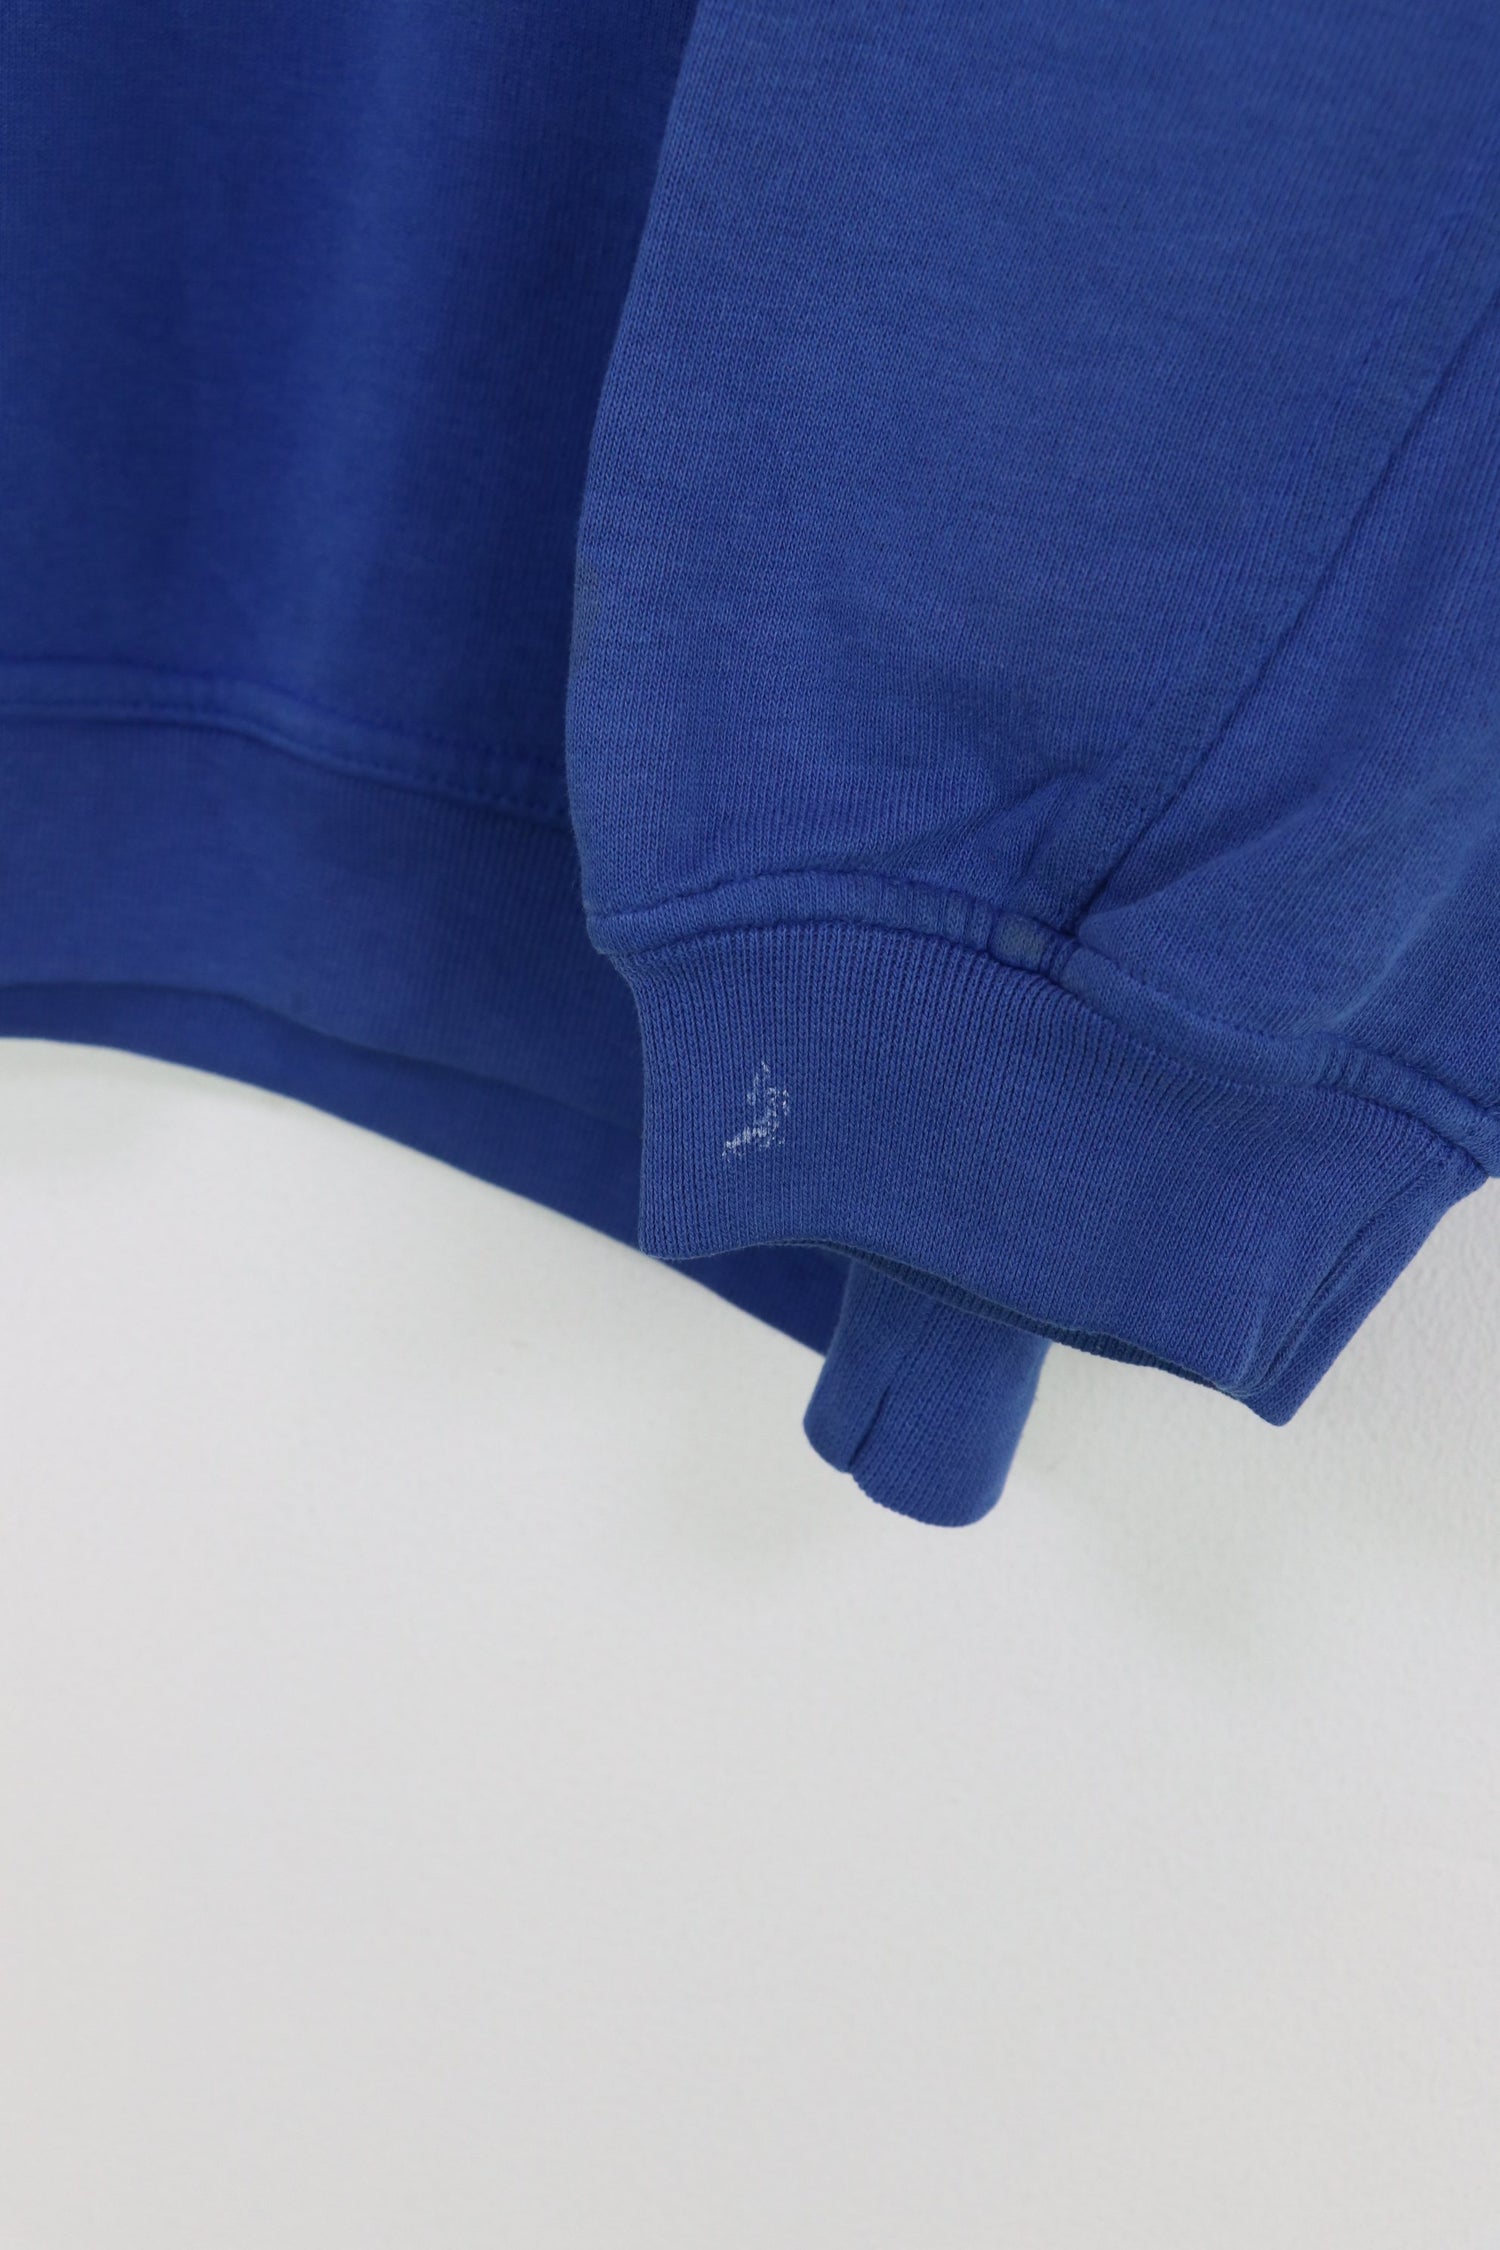 Reebok Sweatshirt Blue Medium